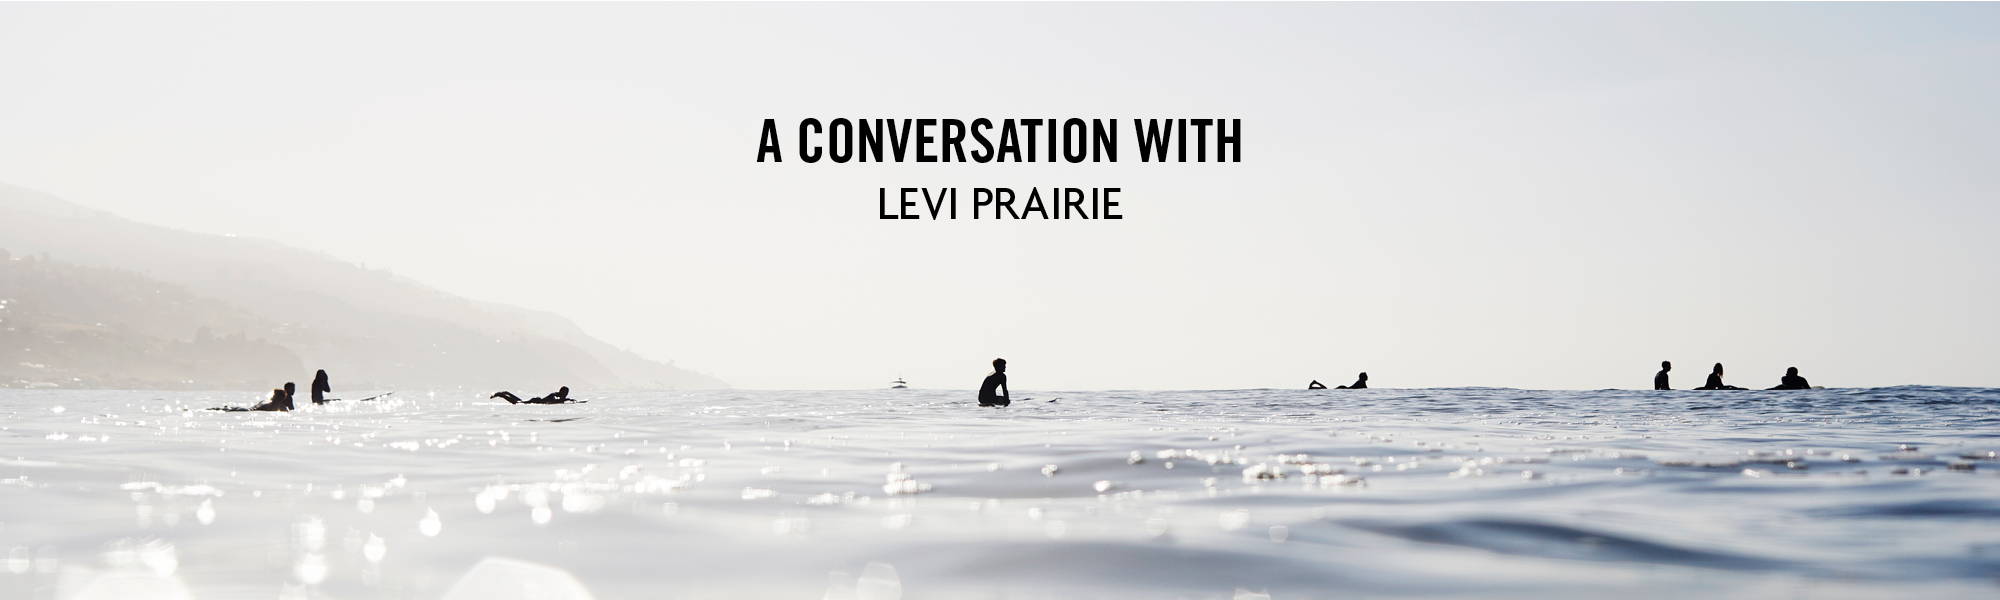 A CONVERSATION WITH LEVI PRAIRIE